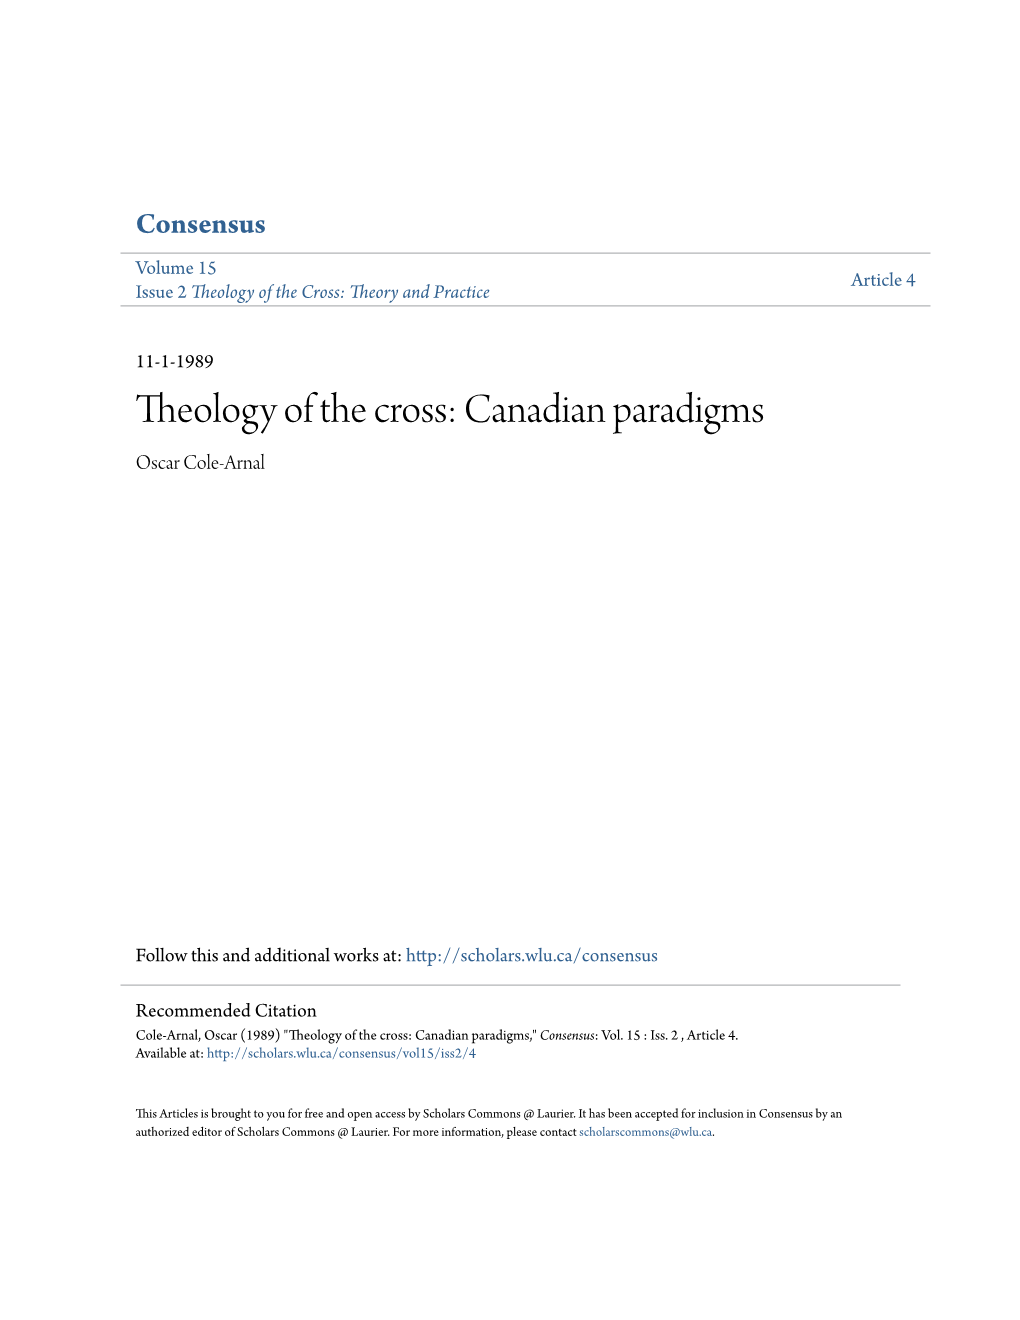 Theology of the Cross: Canadian Paradigms Oscar Cole-Arnal